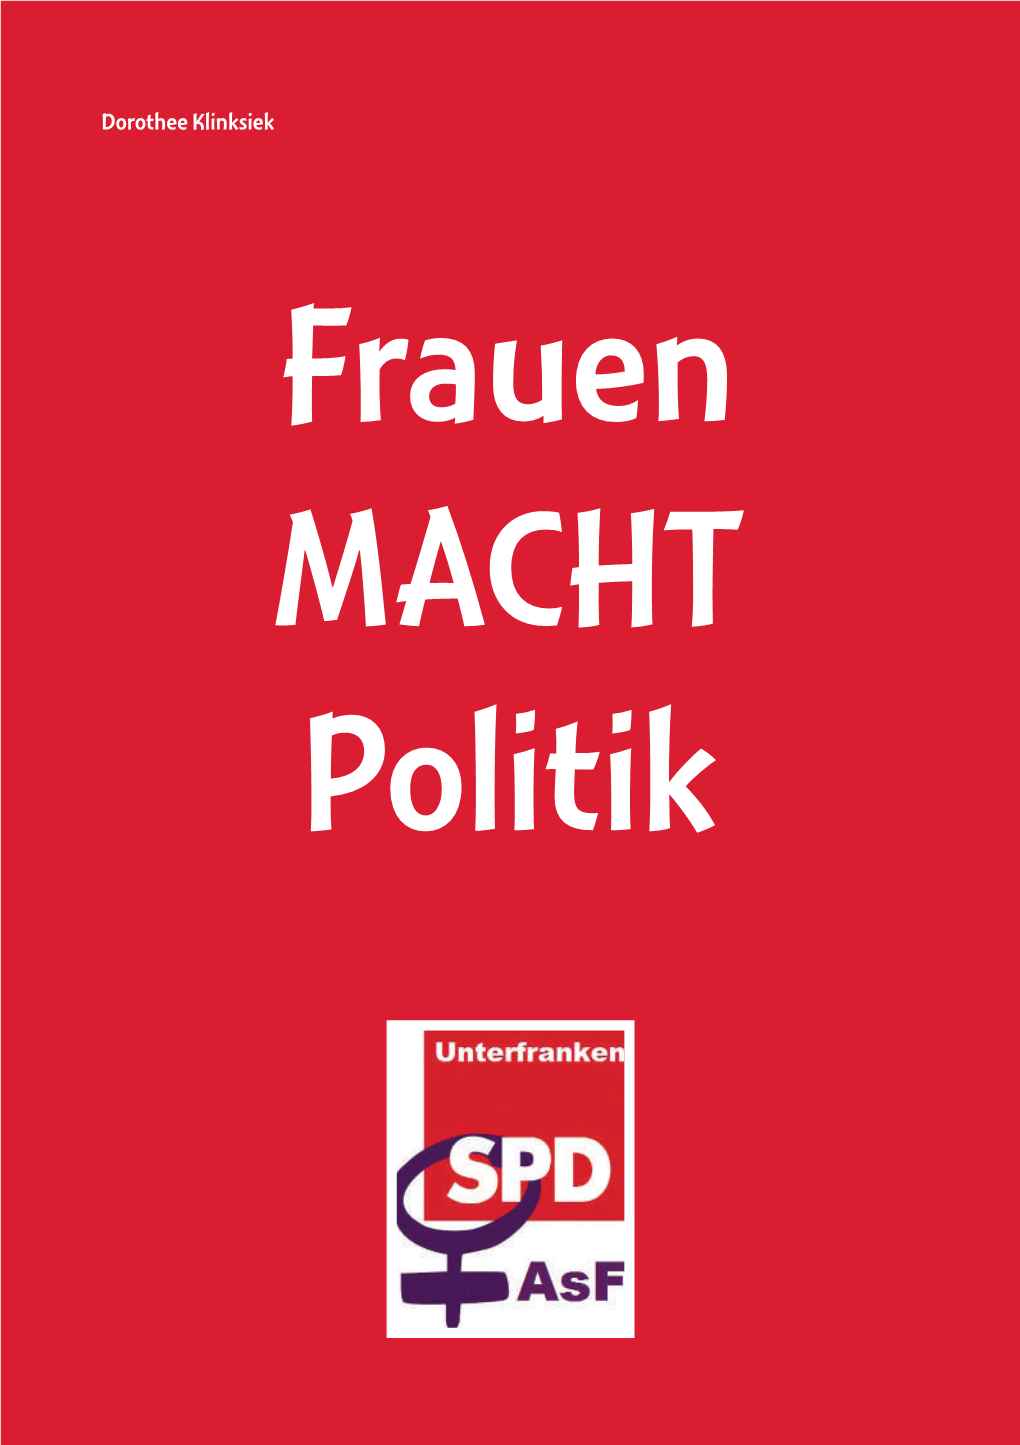 Dorothee Klinksiek Frauen MACHT Politik